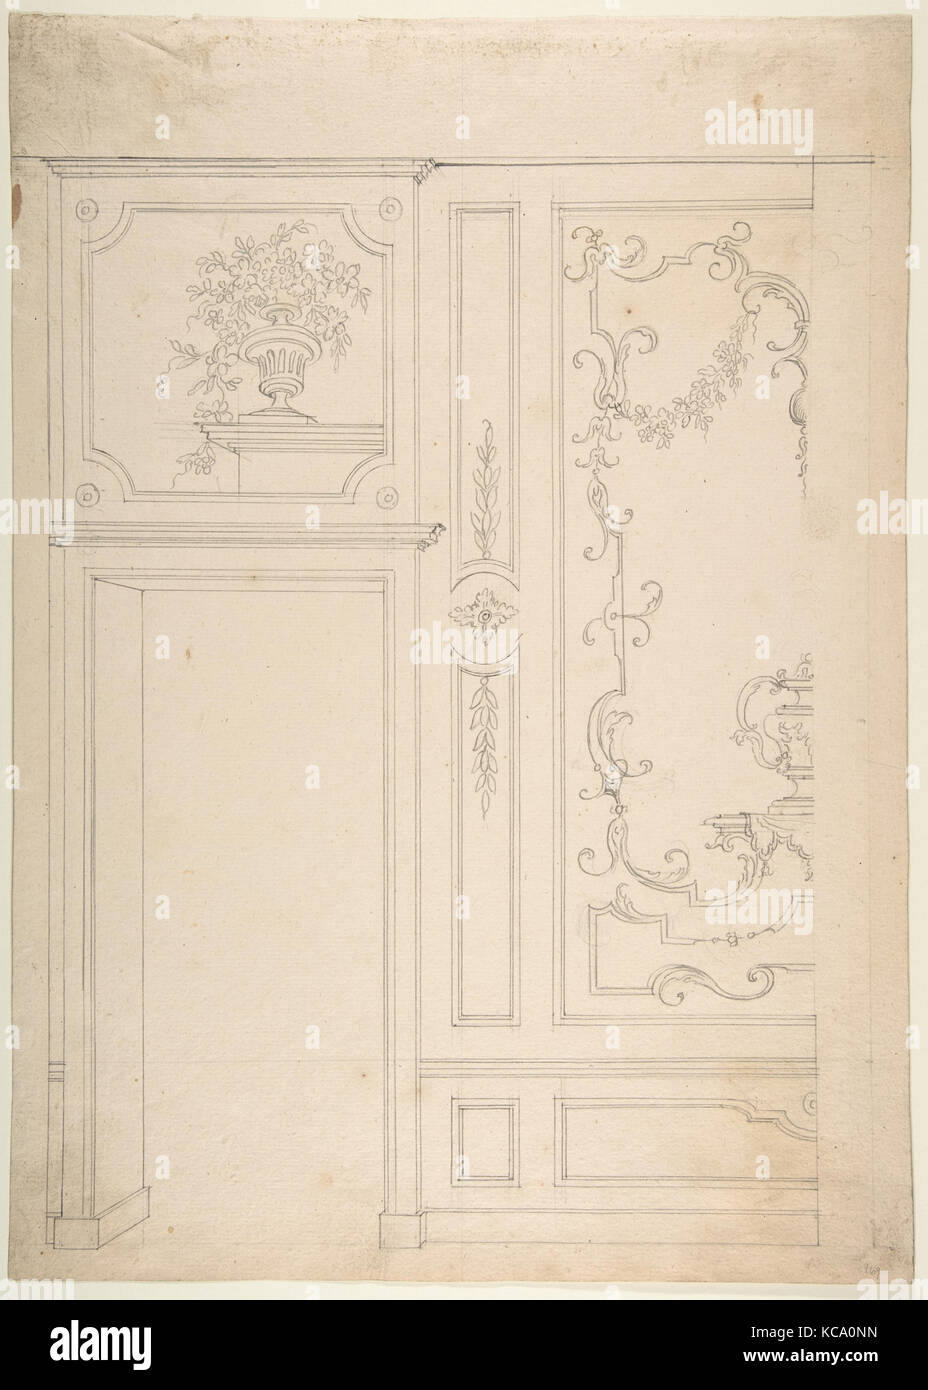 Wall Design, Workshop of Leonardo Marini, 18th century Stock Photo